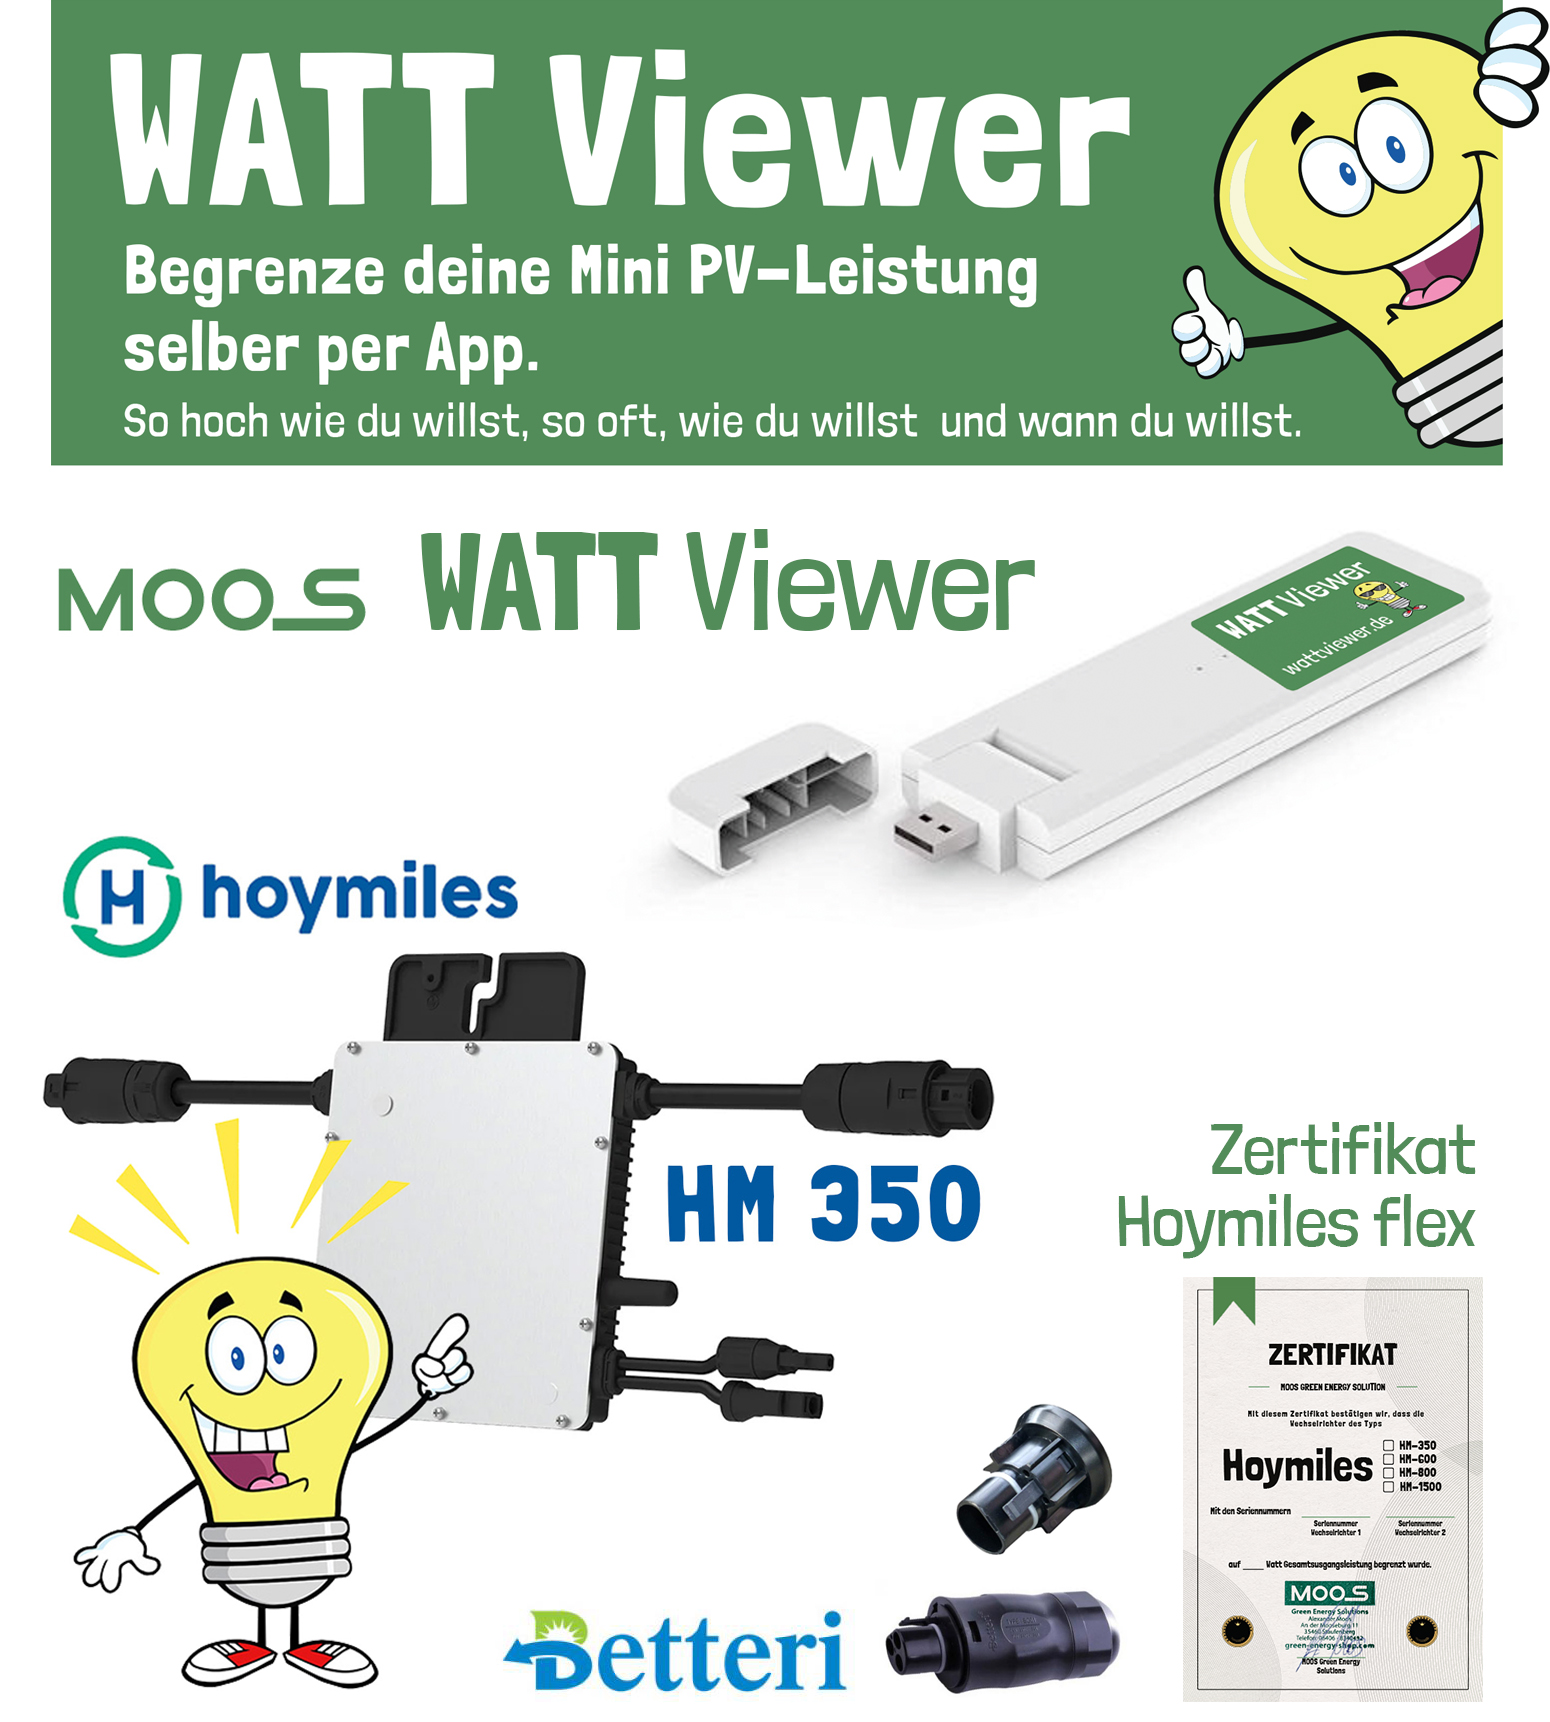 https://pv.deals/images/product_images/original_images/WATTViewer_hoymiles-hm-350_PVdeals%20(1).jpg